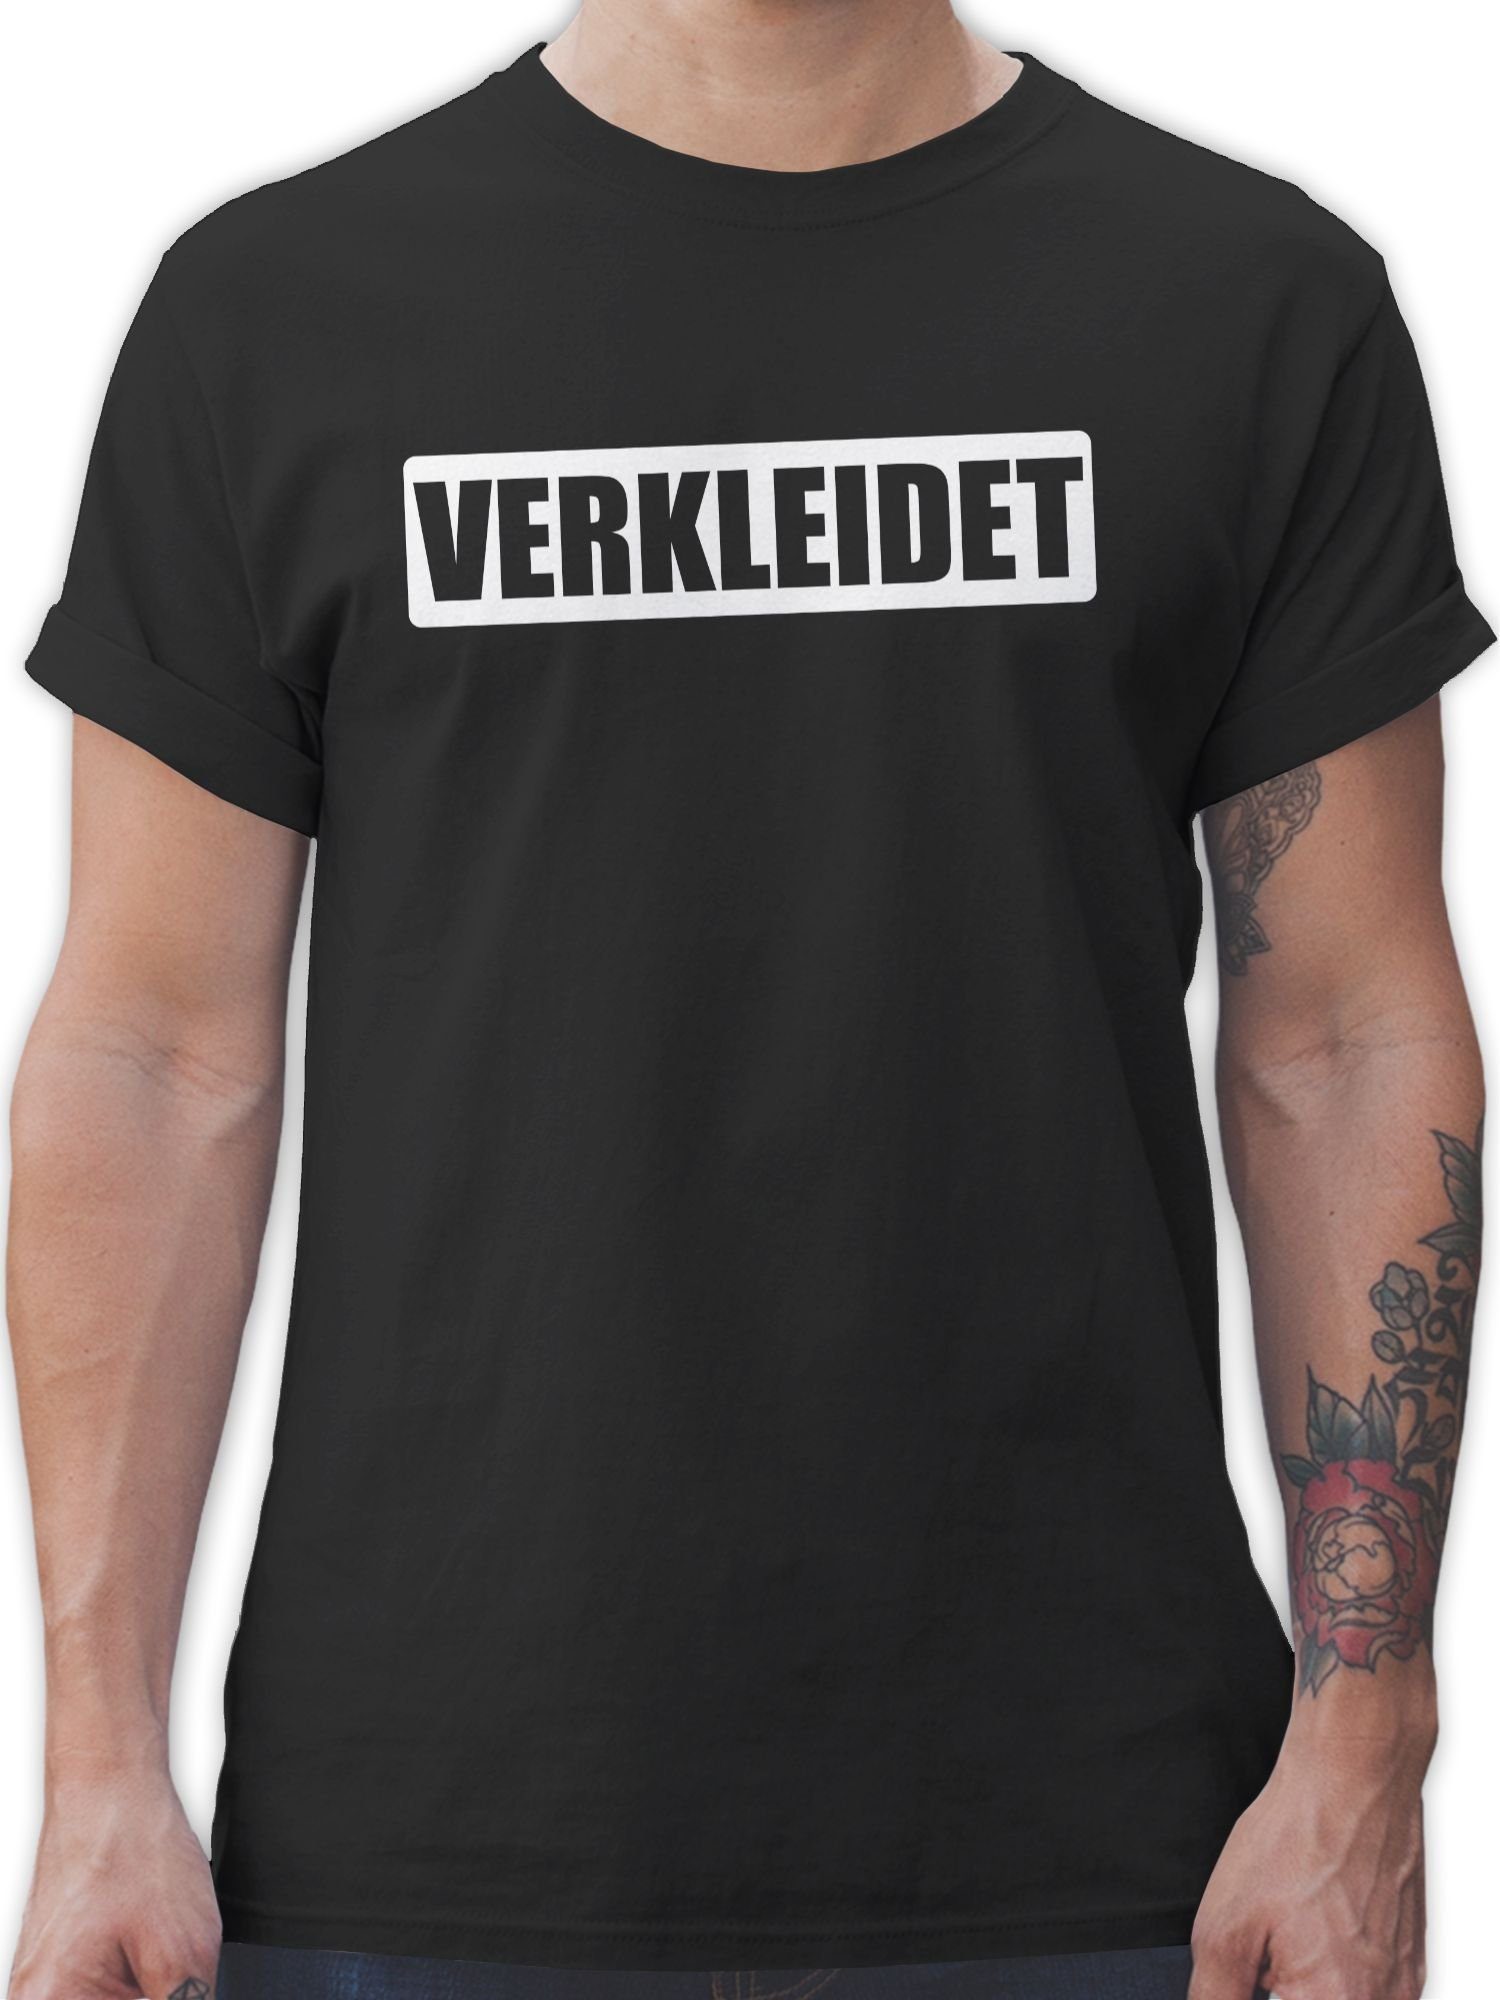 Shirtracer T-Shirt Verkleidet - Faschingskostüm Lustig Ironie Karneval Outfit 1 Schwarz